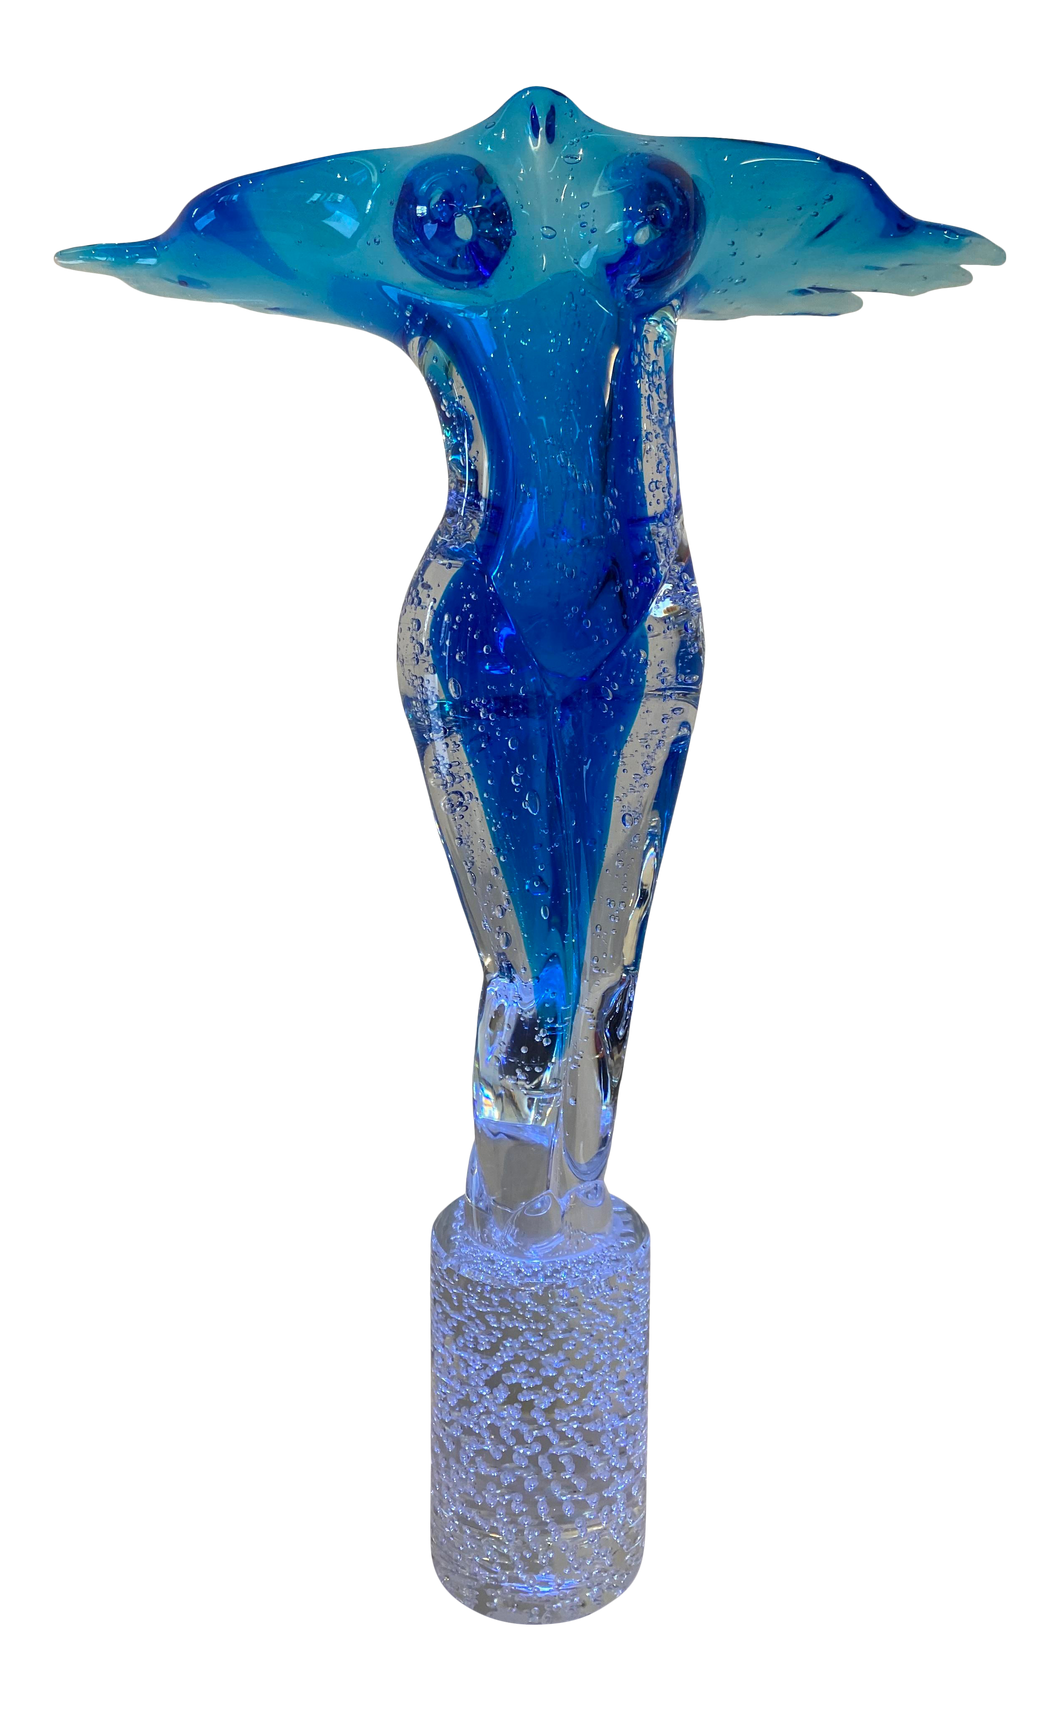 Wings Murano Glass Sculpture by Schiavon